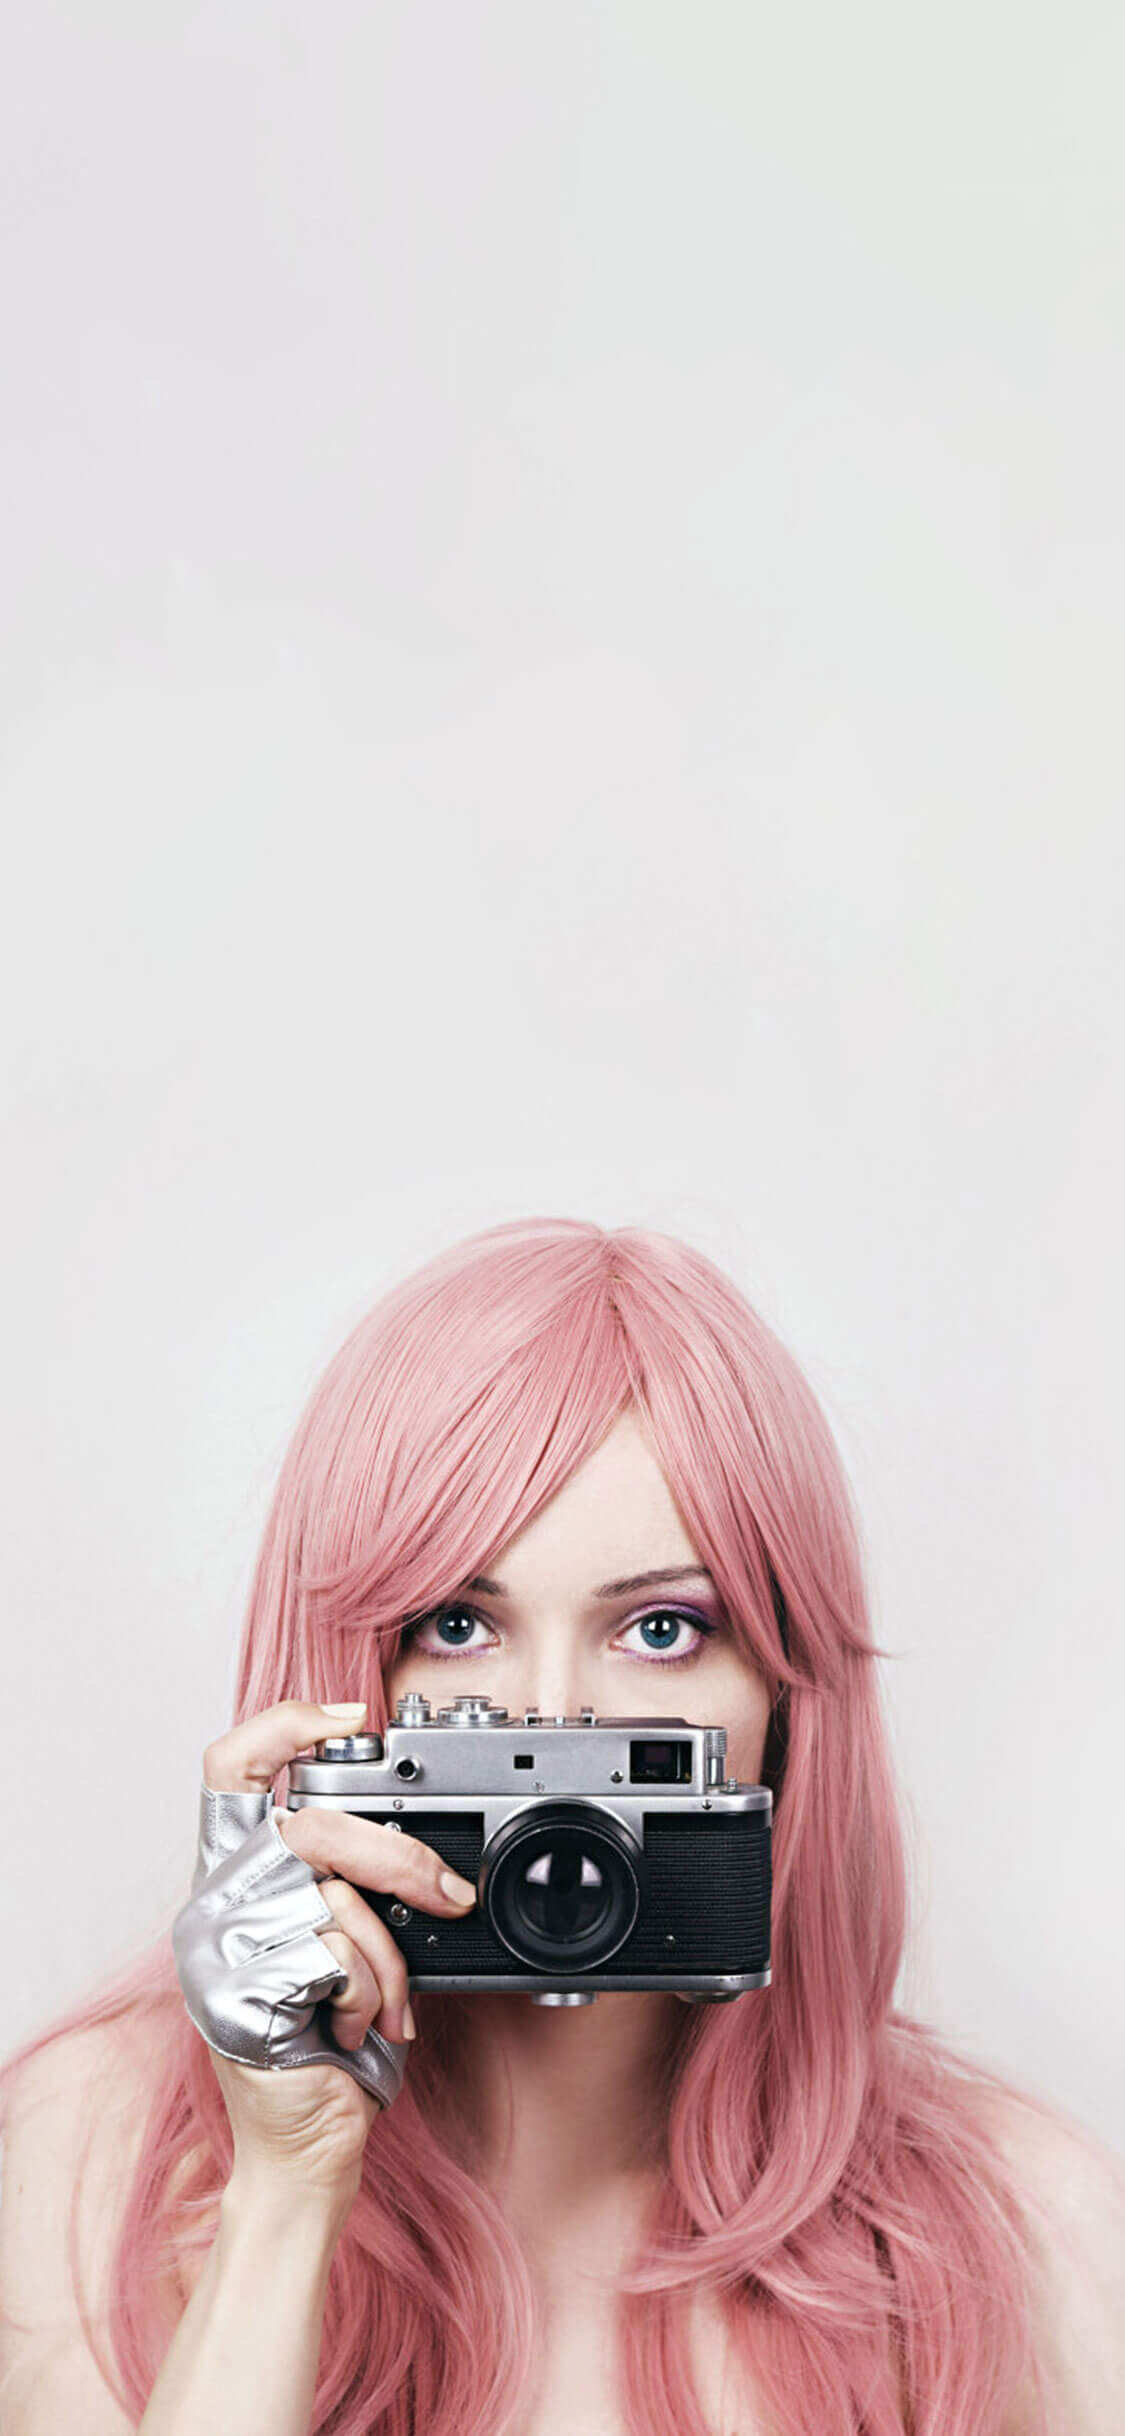 Cool-girl-drží-fotoaparát